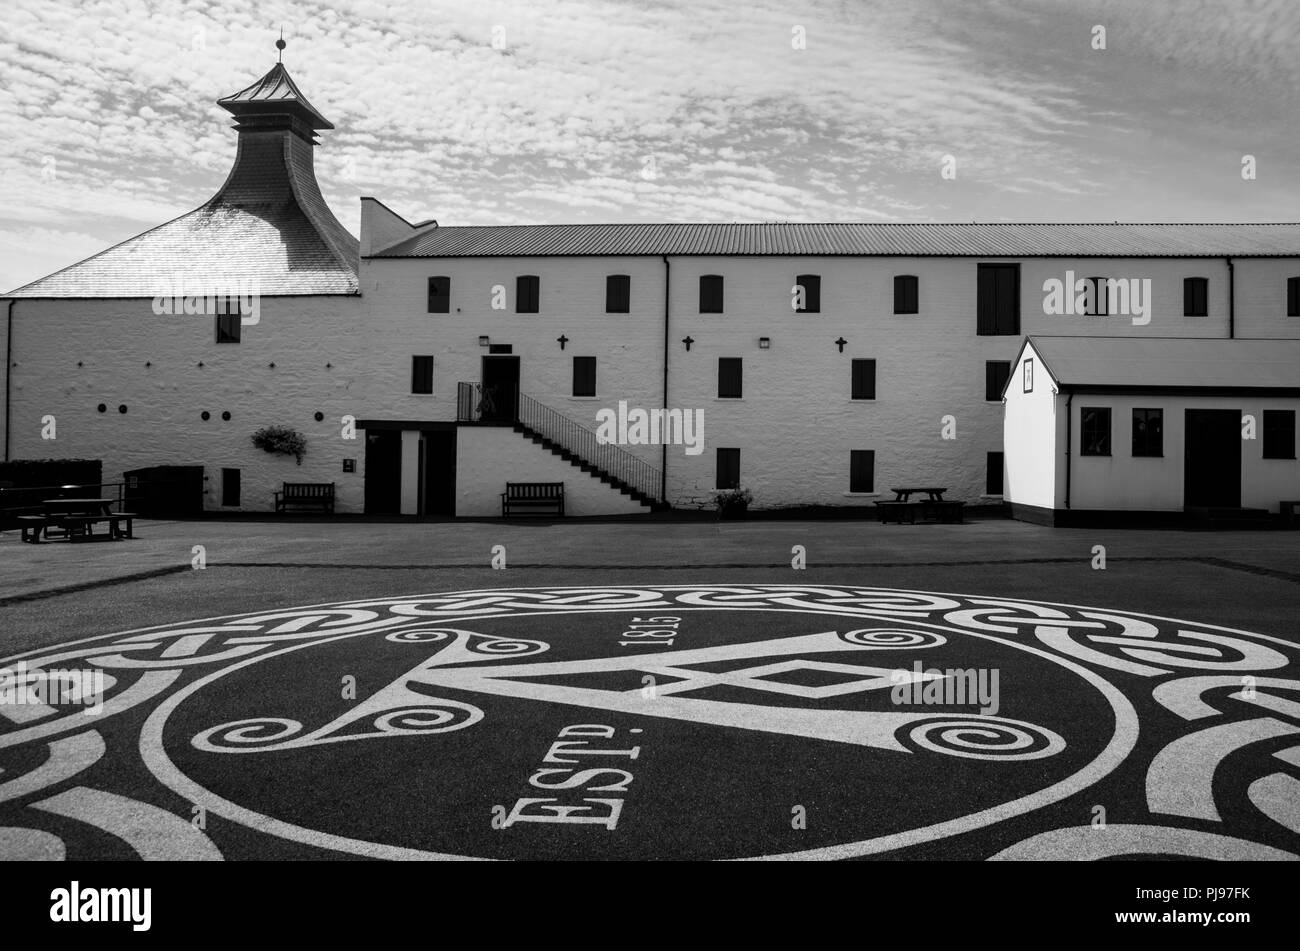 Ardbeg Whisky logo in courtyard at distillery, Islay, Scotland Stock Photo